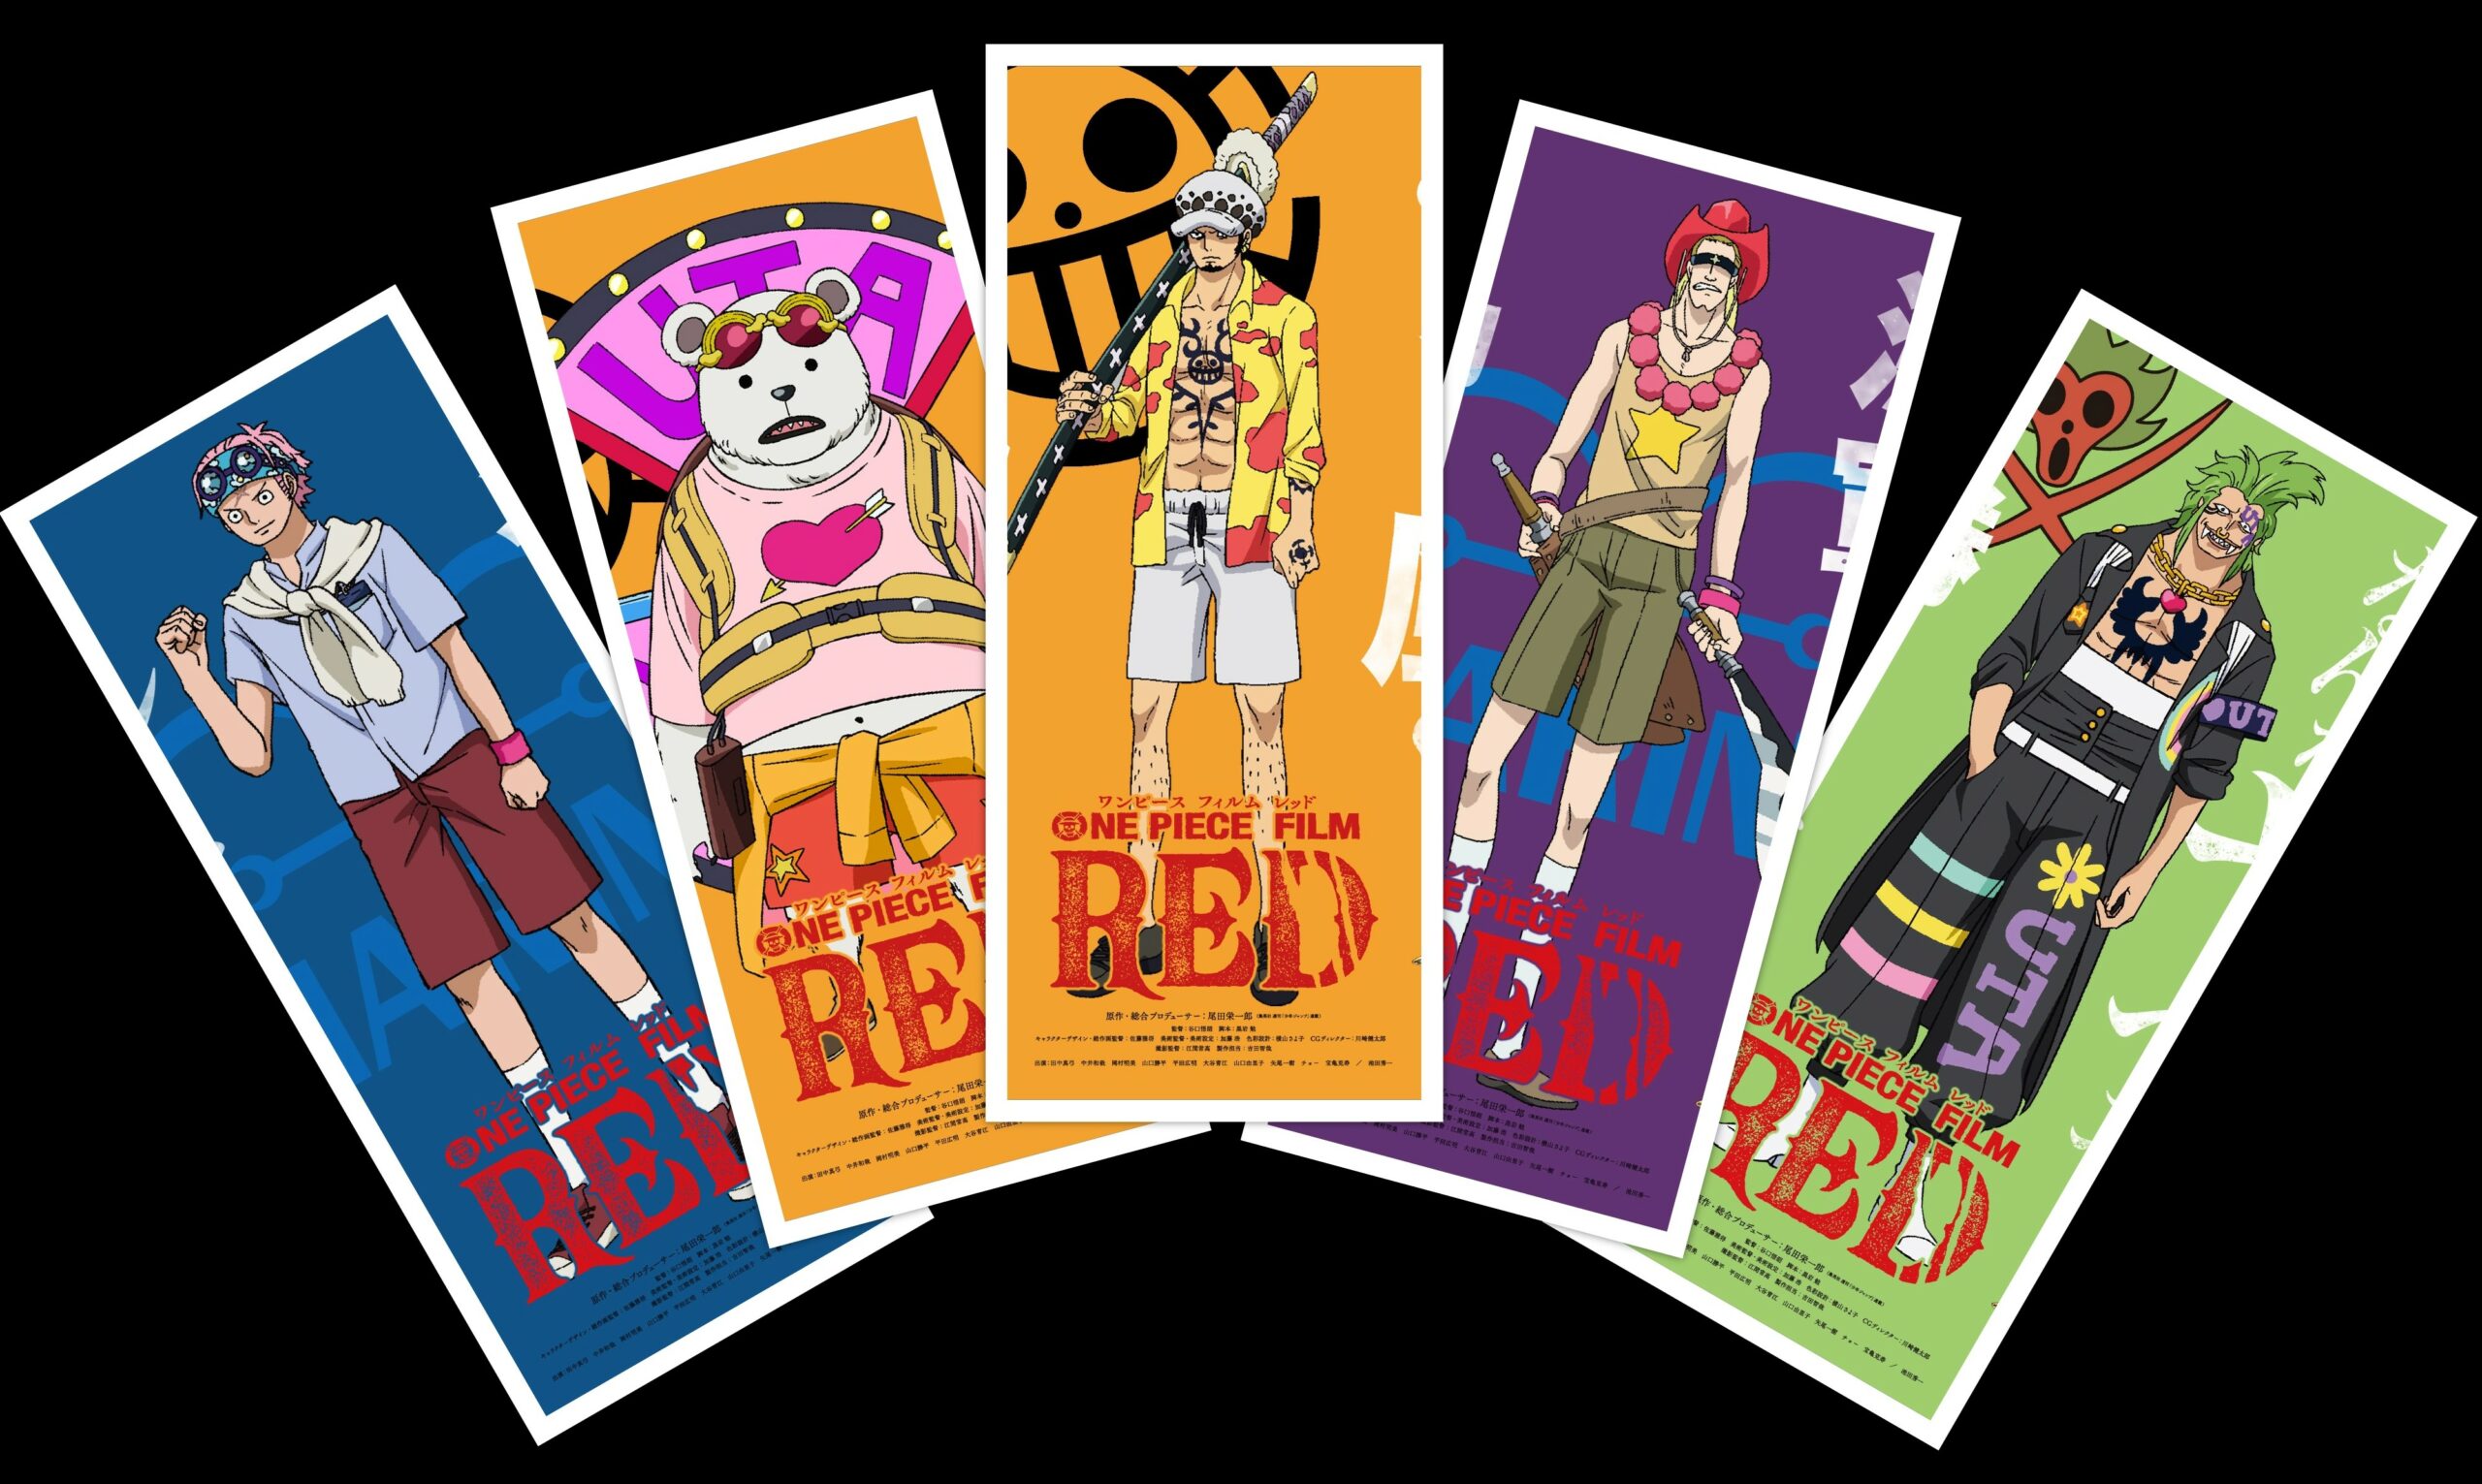 One Piece Film Red: Trafalgar Law, Bepo, Bartolomeo, Koby and Helmeppo